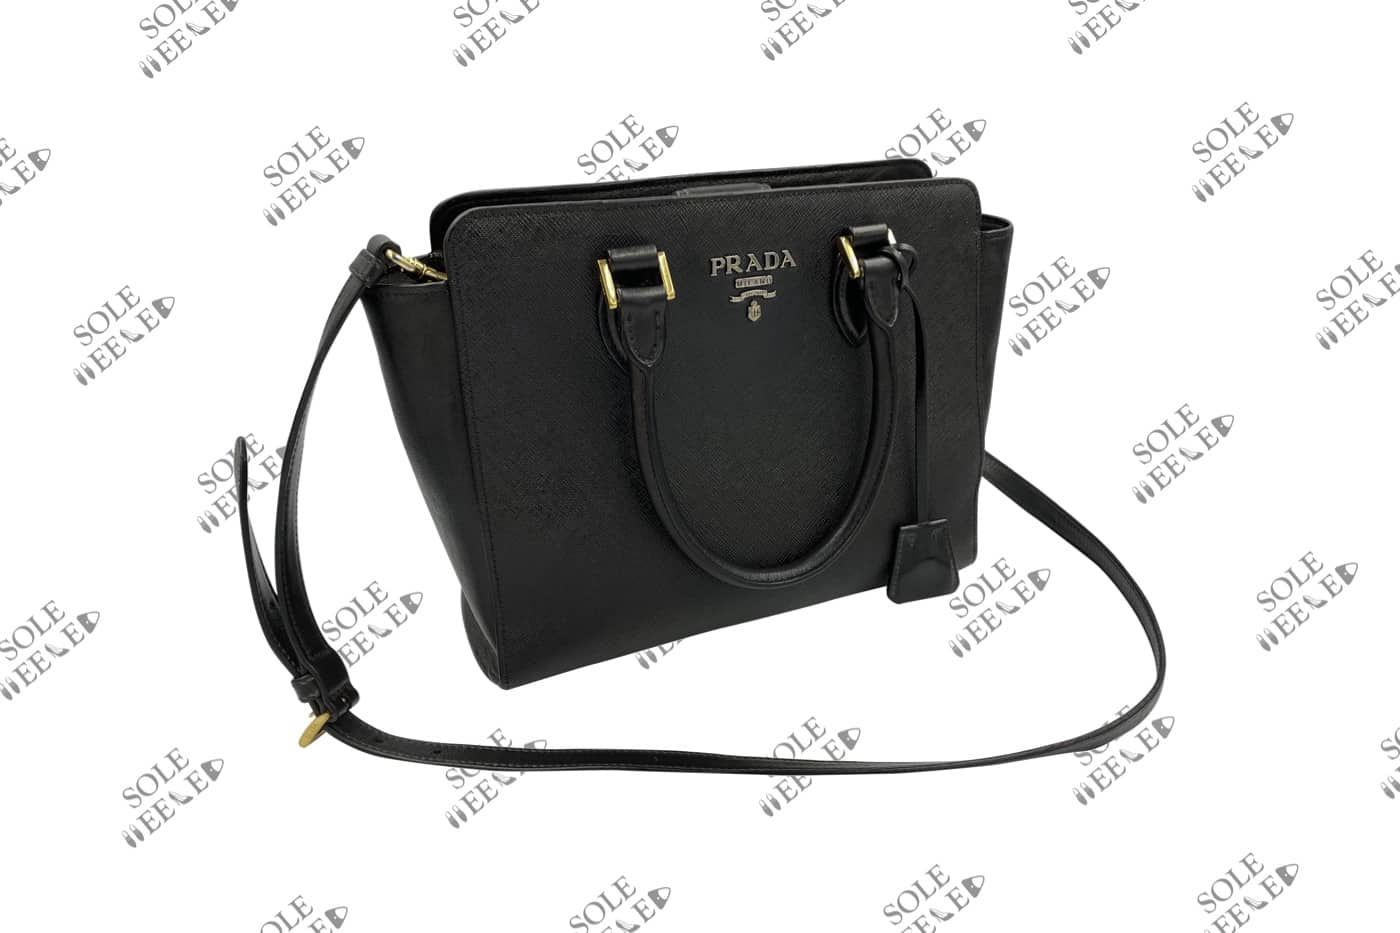 Prada - Monochrome Saffiano Leather Bag with Calf Leather Sides Nero